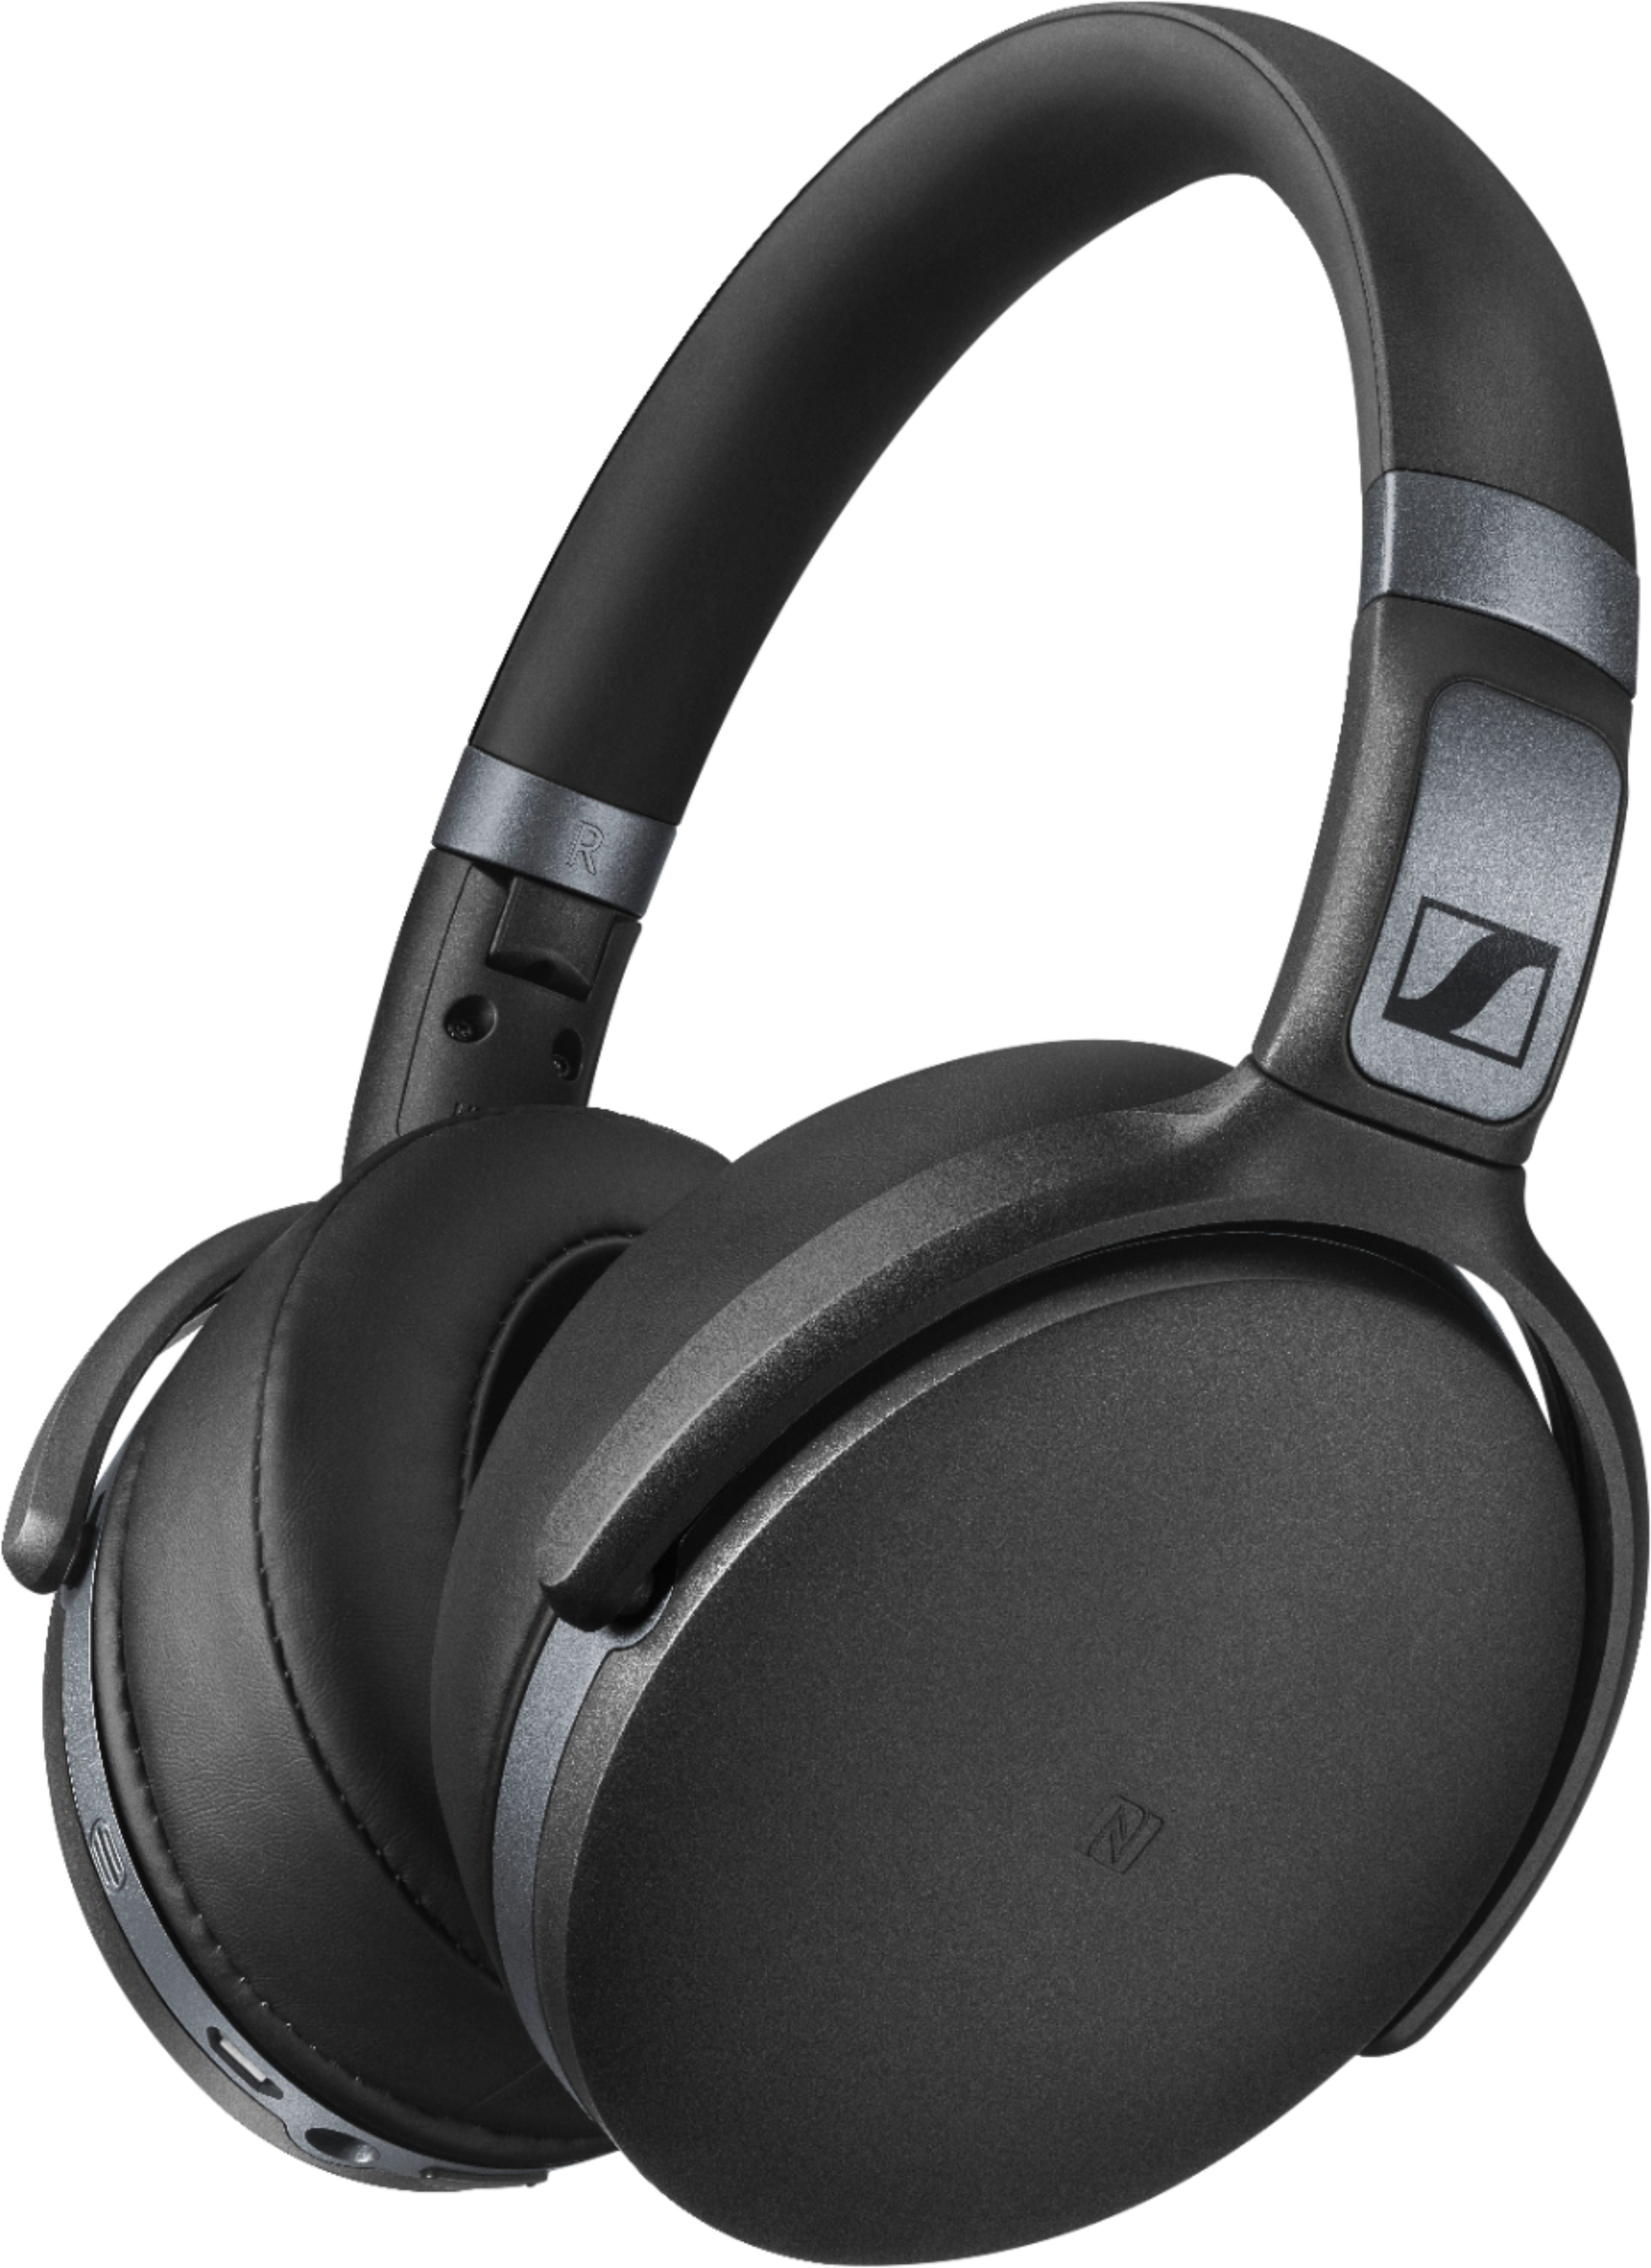 Sennheiser - HD 4.40 Wireless Over-the-Ear Headphones - Black